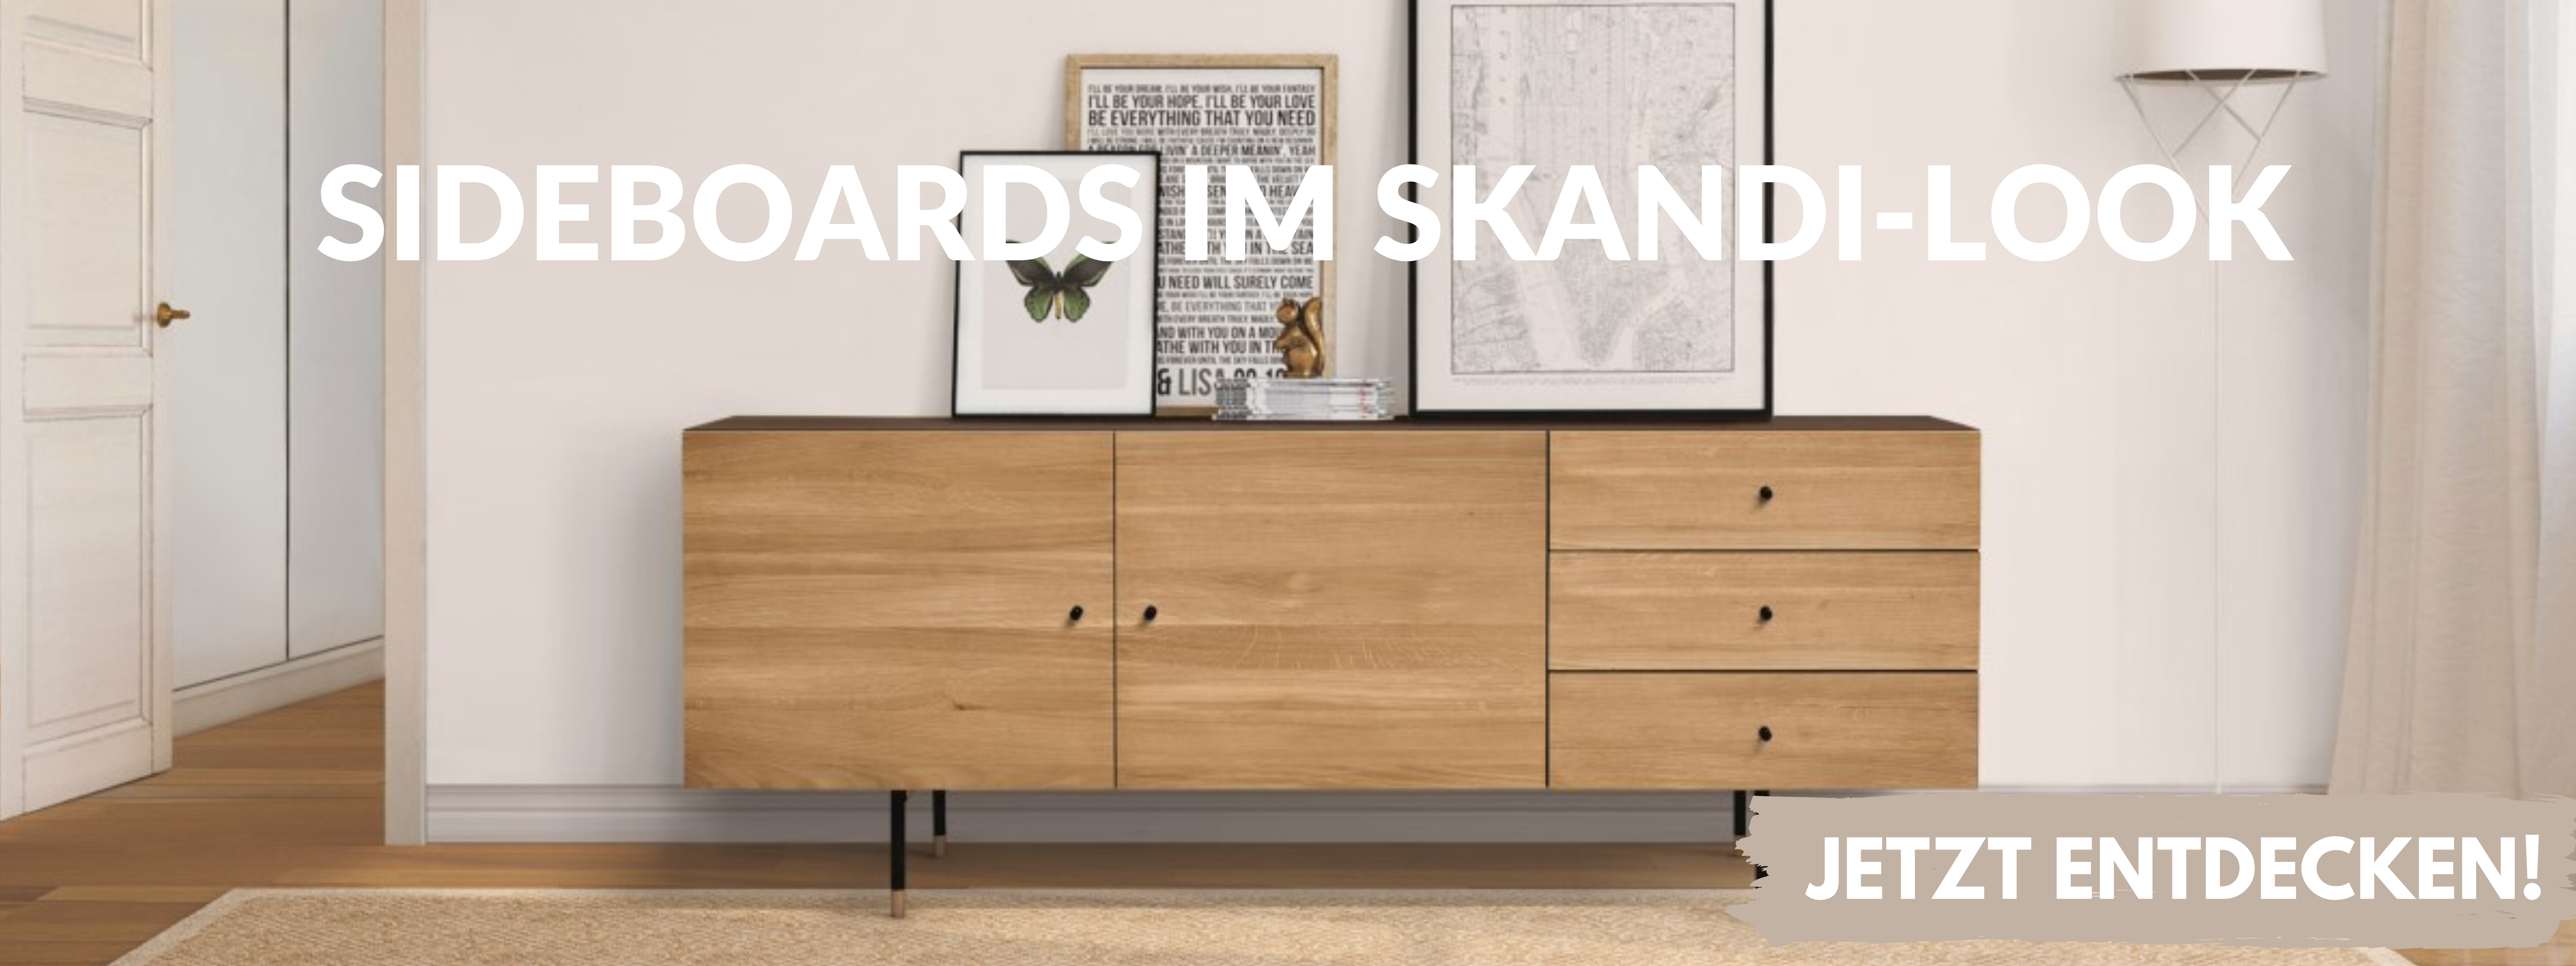 Side-Boards Inspirationen im Skandilook aus Massivholz